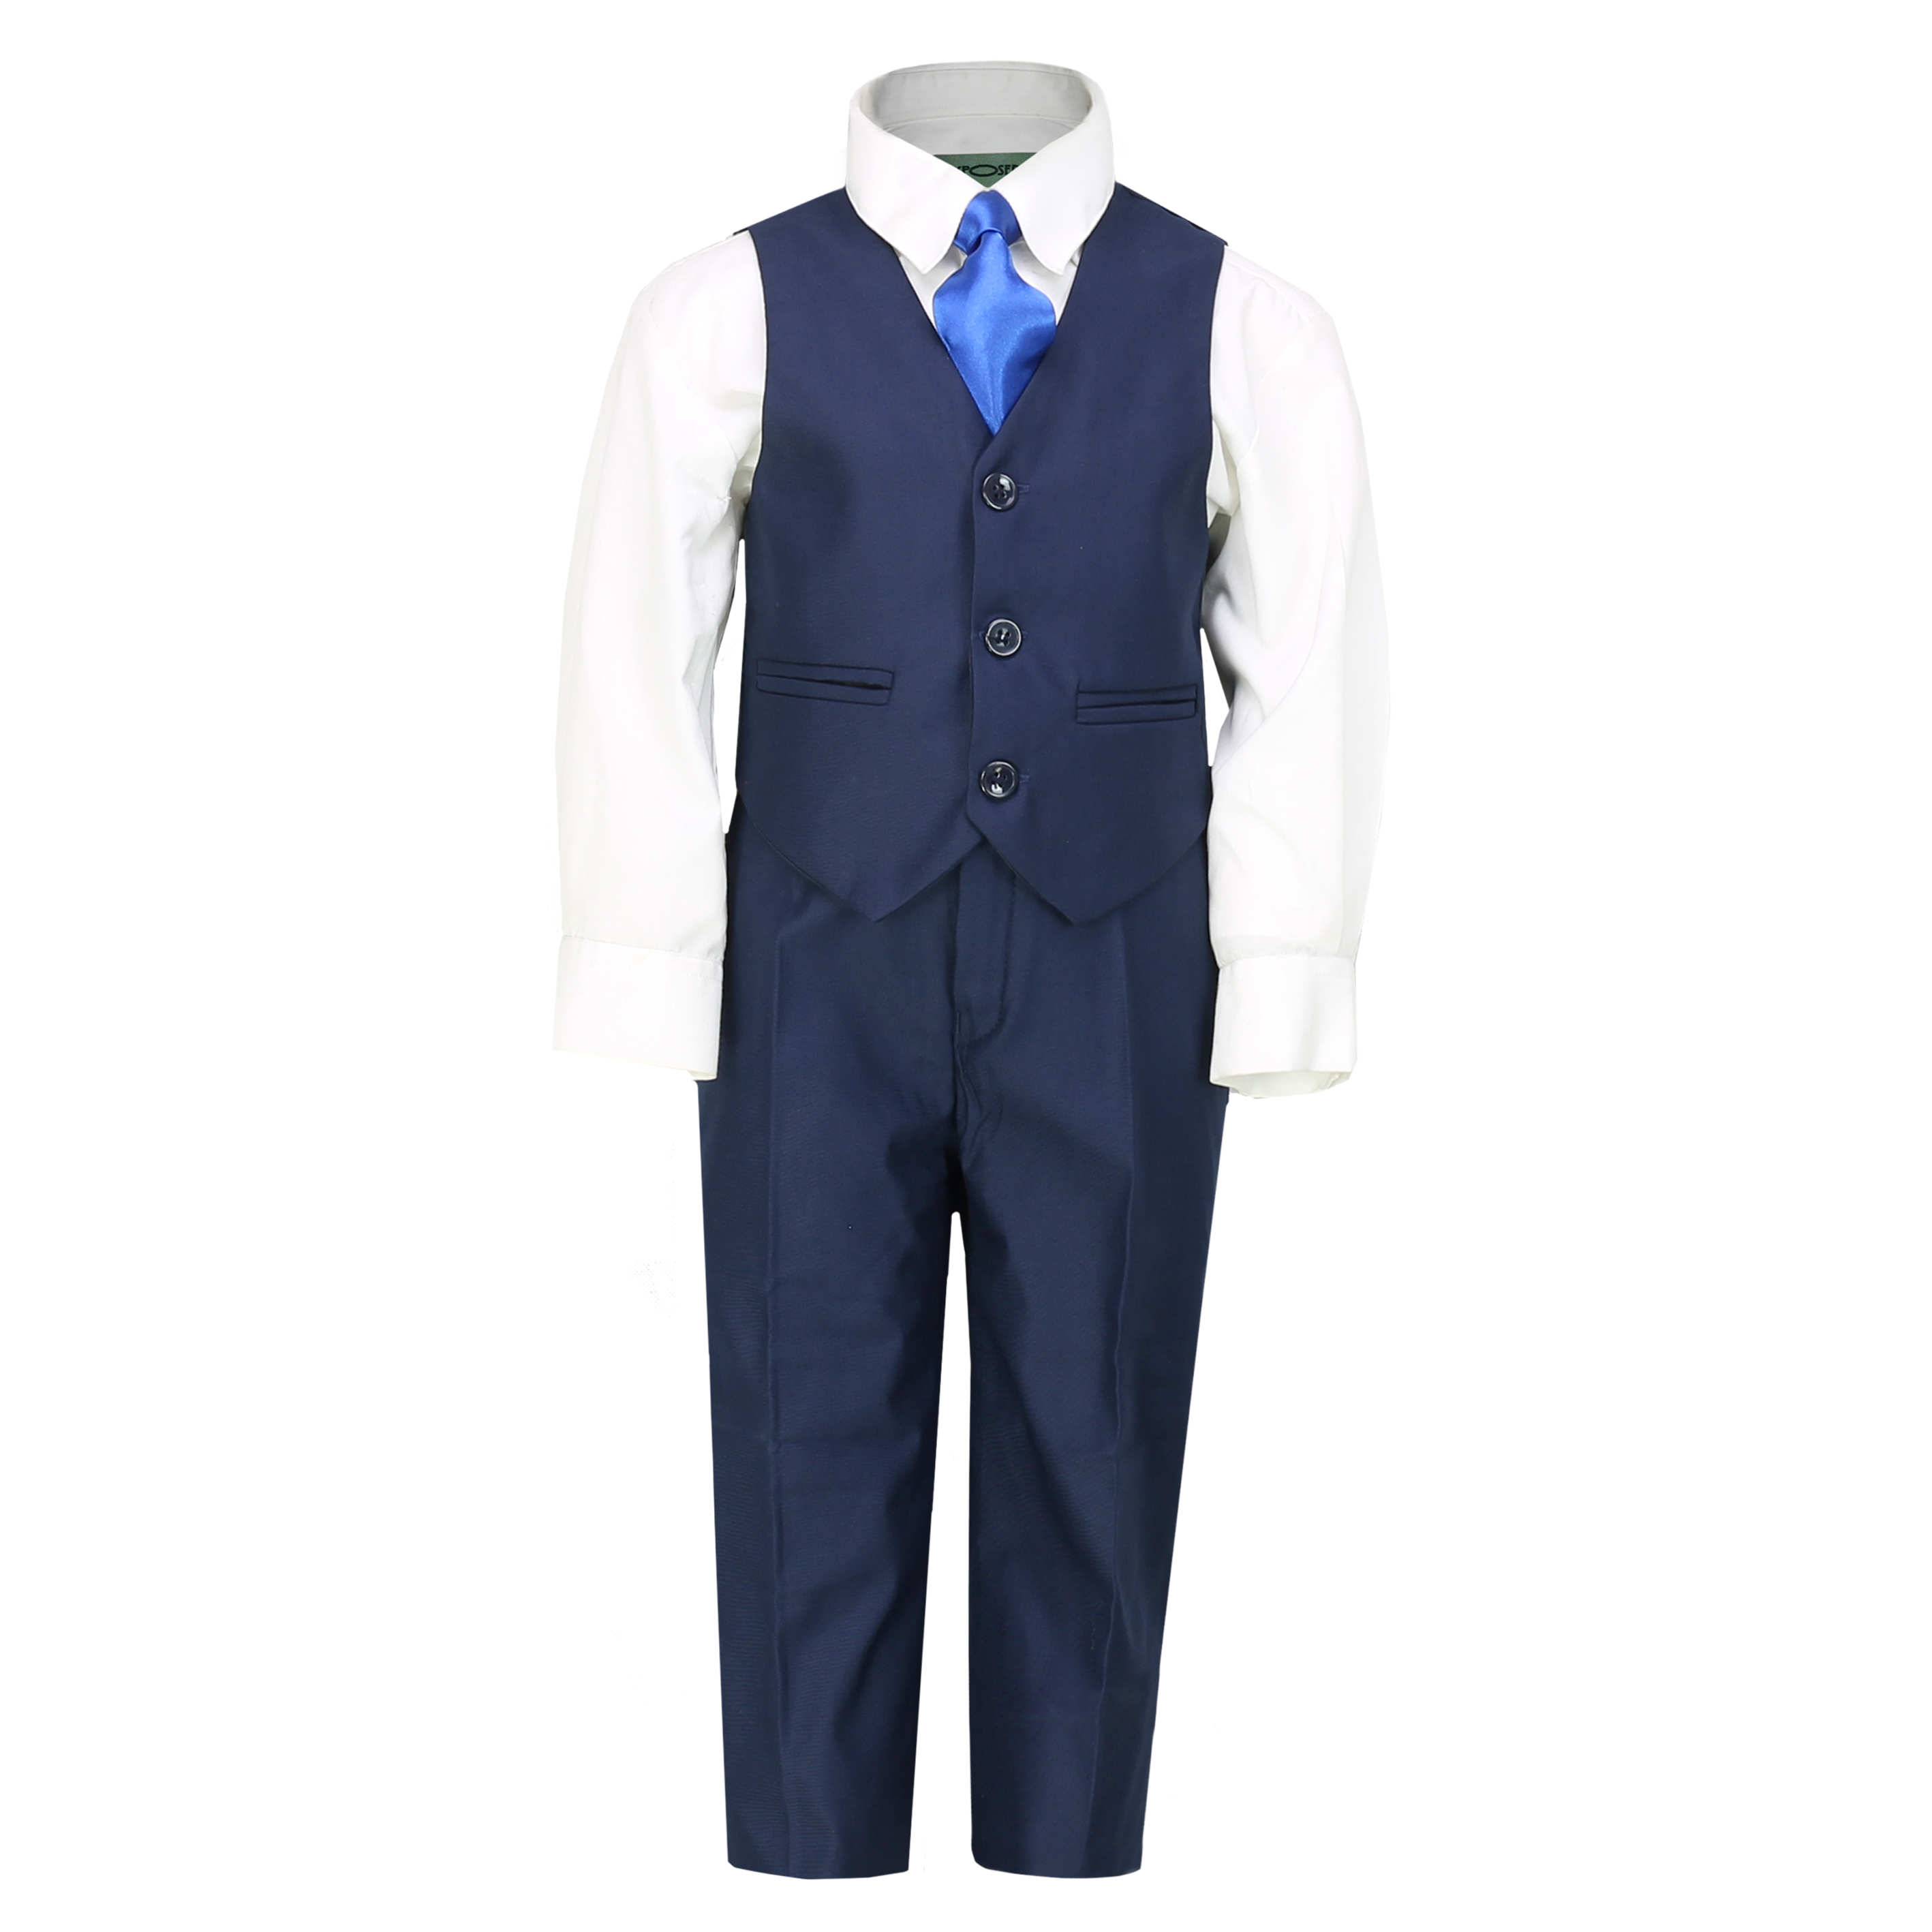 Kids Boys 3 Piece Suit Tuxedo Jacket Navy Smart Formal Wedding Party Pageboy